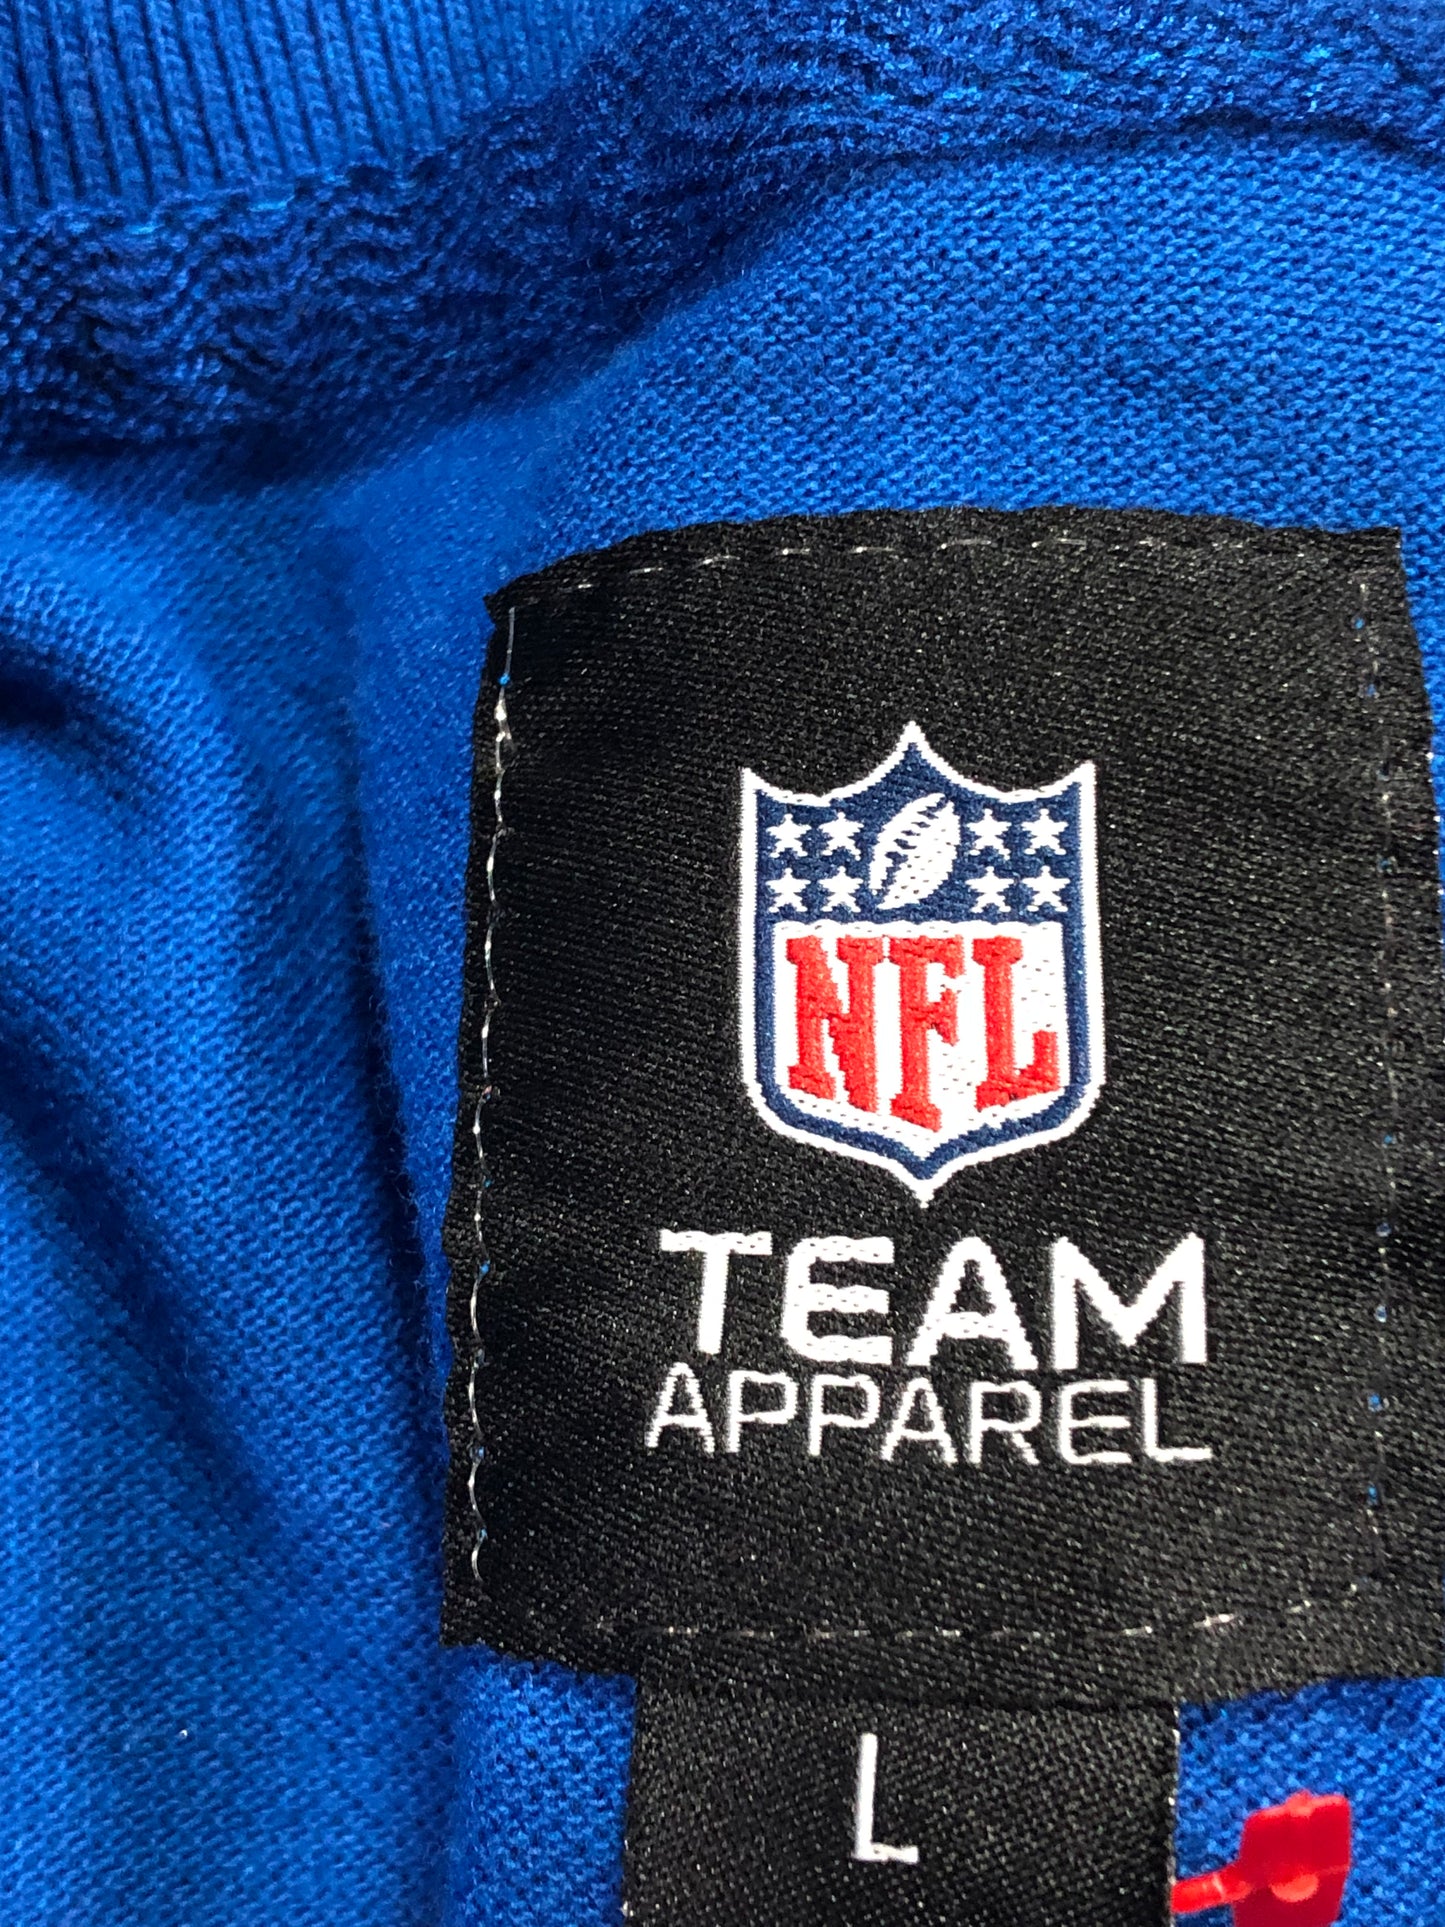 New England Patriots Polo Shirt Embroidered Retro NFL Team Apparel PREOWNED